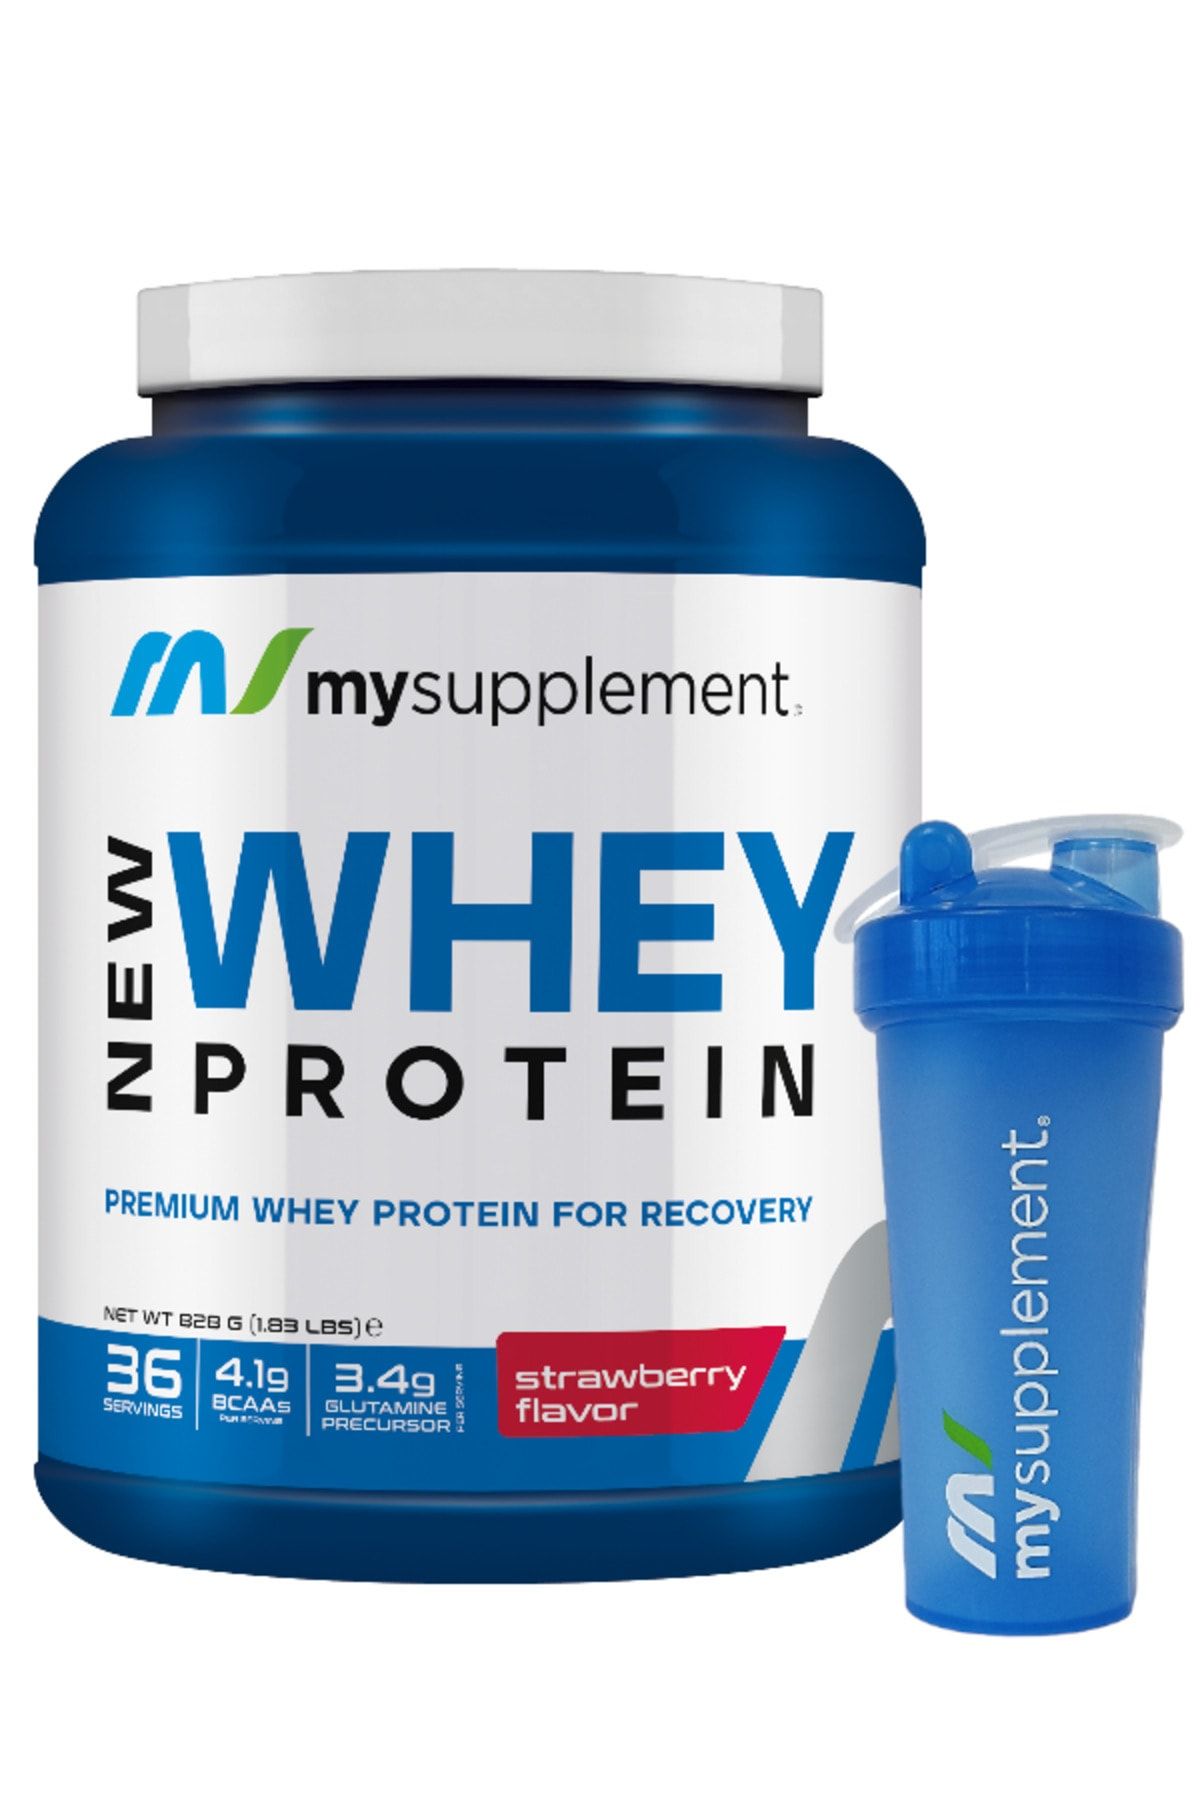 Mysupplement New Whey Protein Çilek 36 Servis 828 gr Protein Tozu %78 Protein 4.1 gr Bcaa (PROTEİN SENTEZİ)